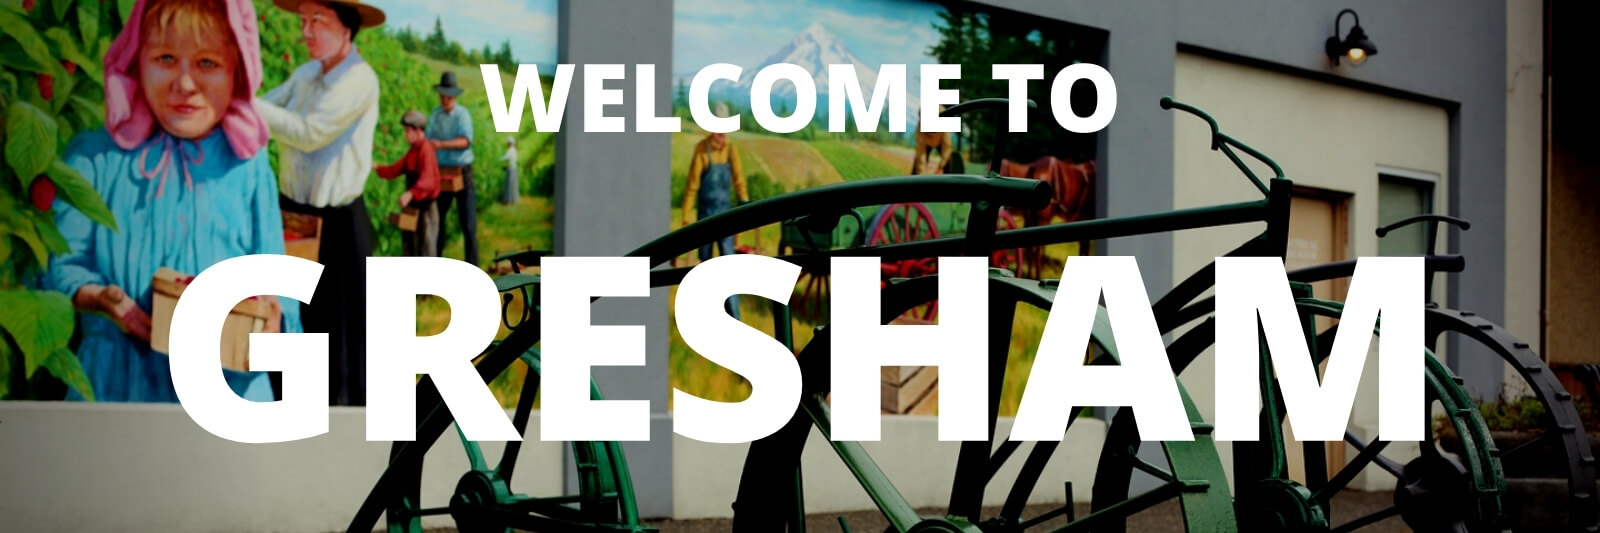 Welcome to Gresham Oregon (2)